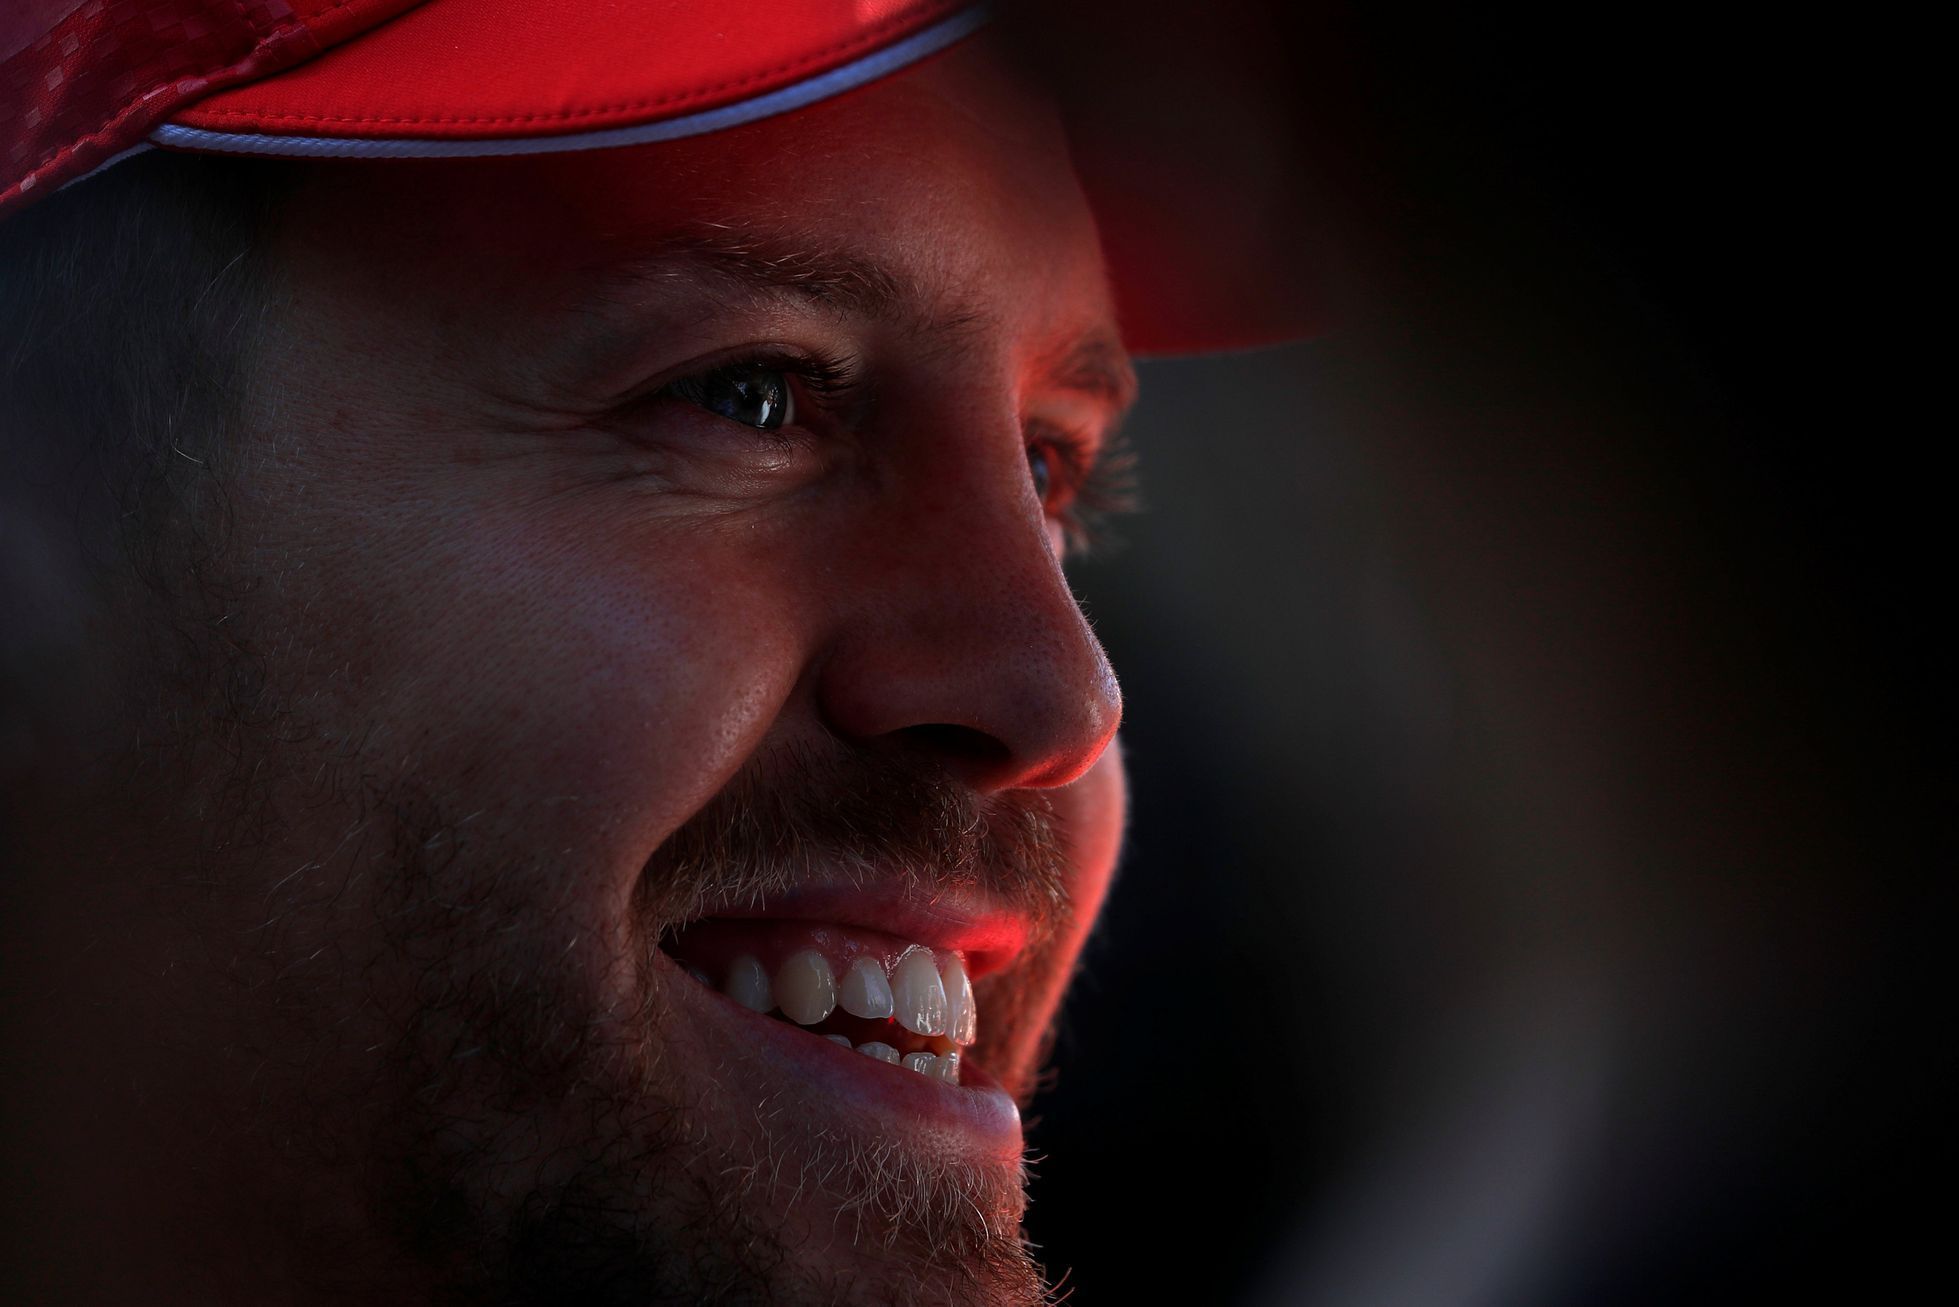 F1, VC Austrálie 2019: Sebastian Vettel, Ferrari